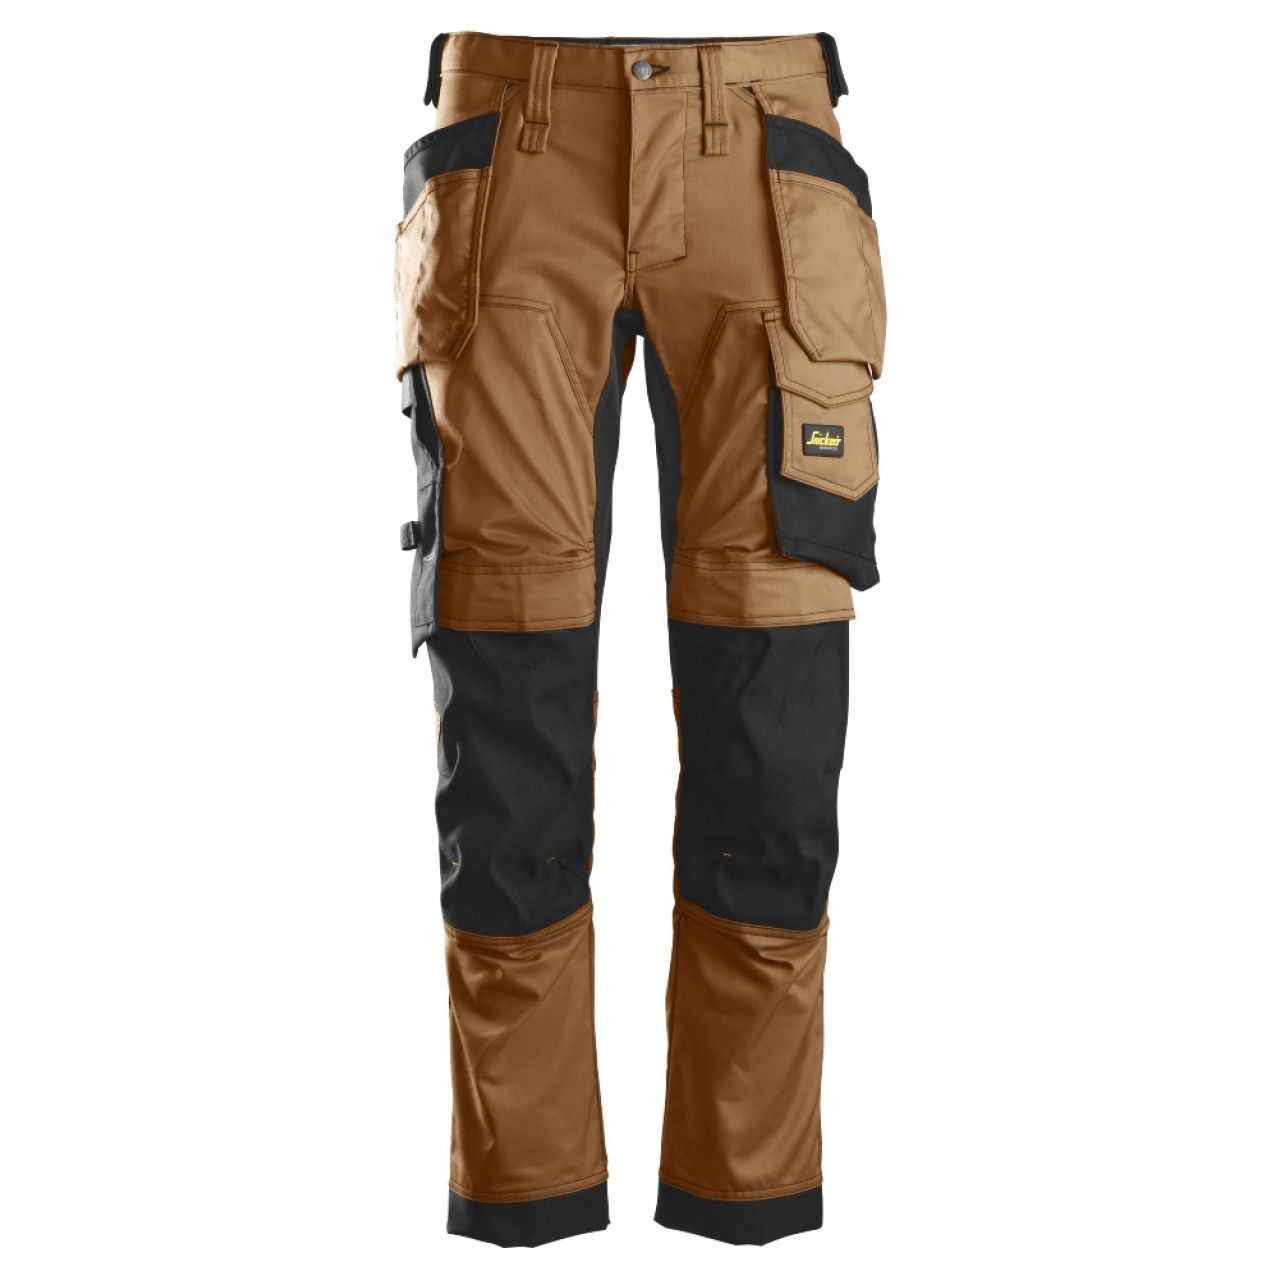 6241 Pantalones largos de trabajo elásticos con bolsillos flotantes AllroundWork marron-negro talla 44